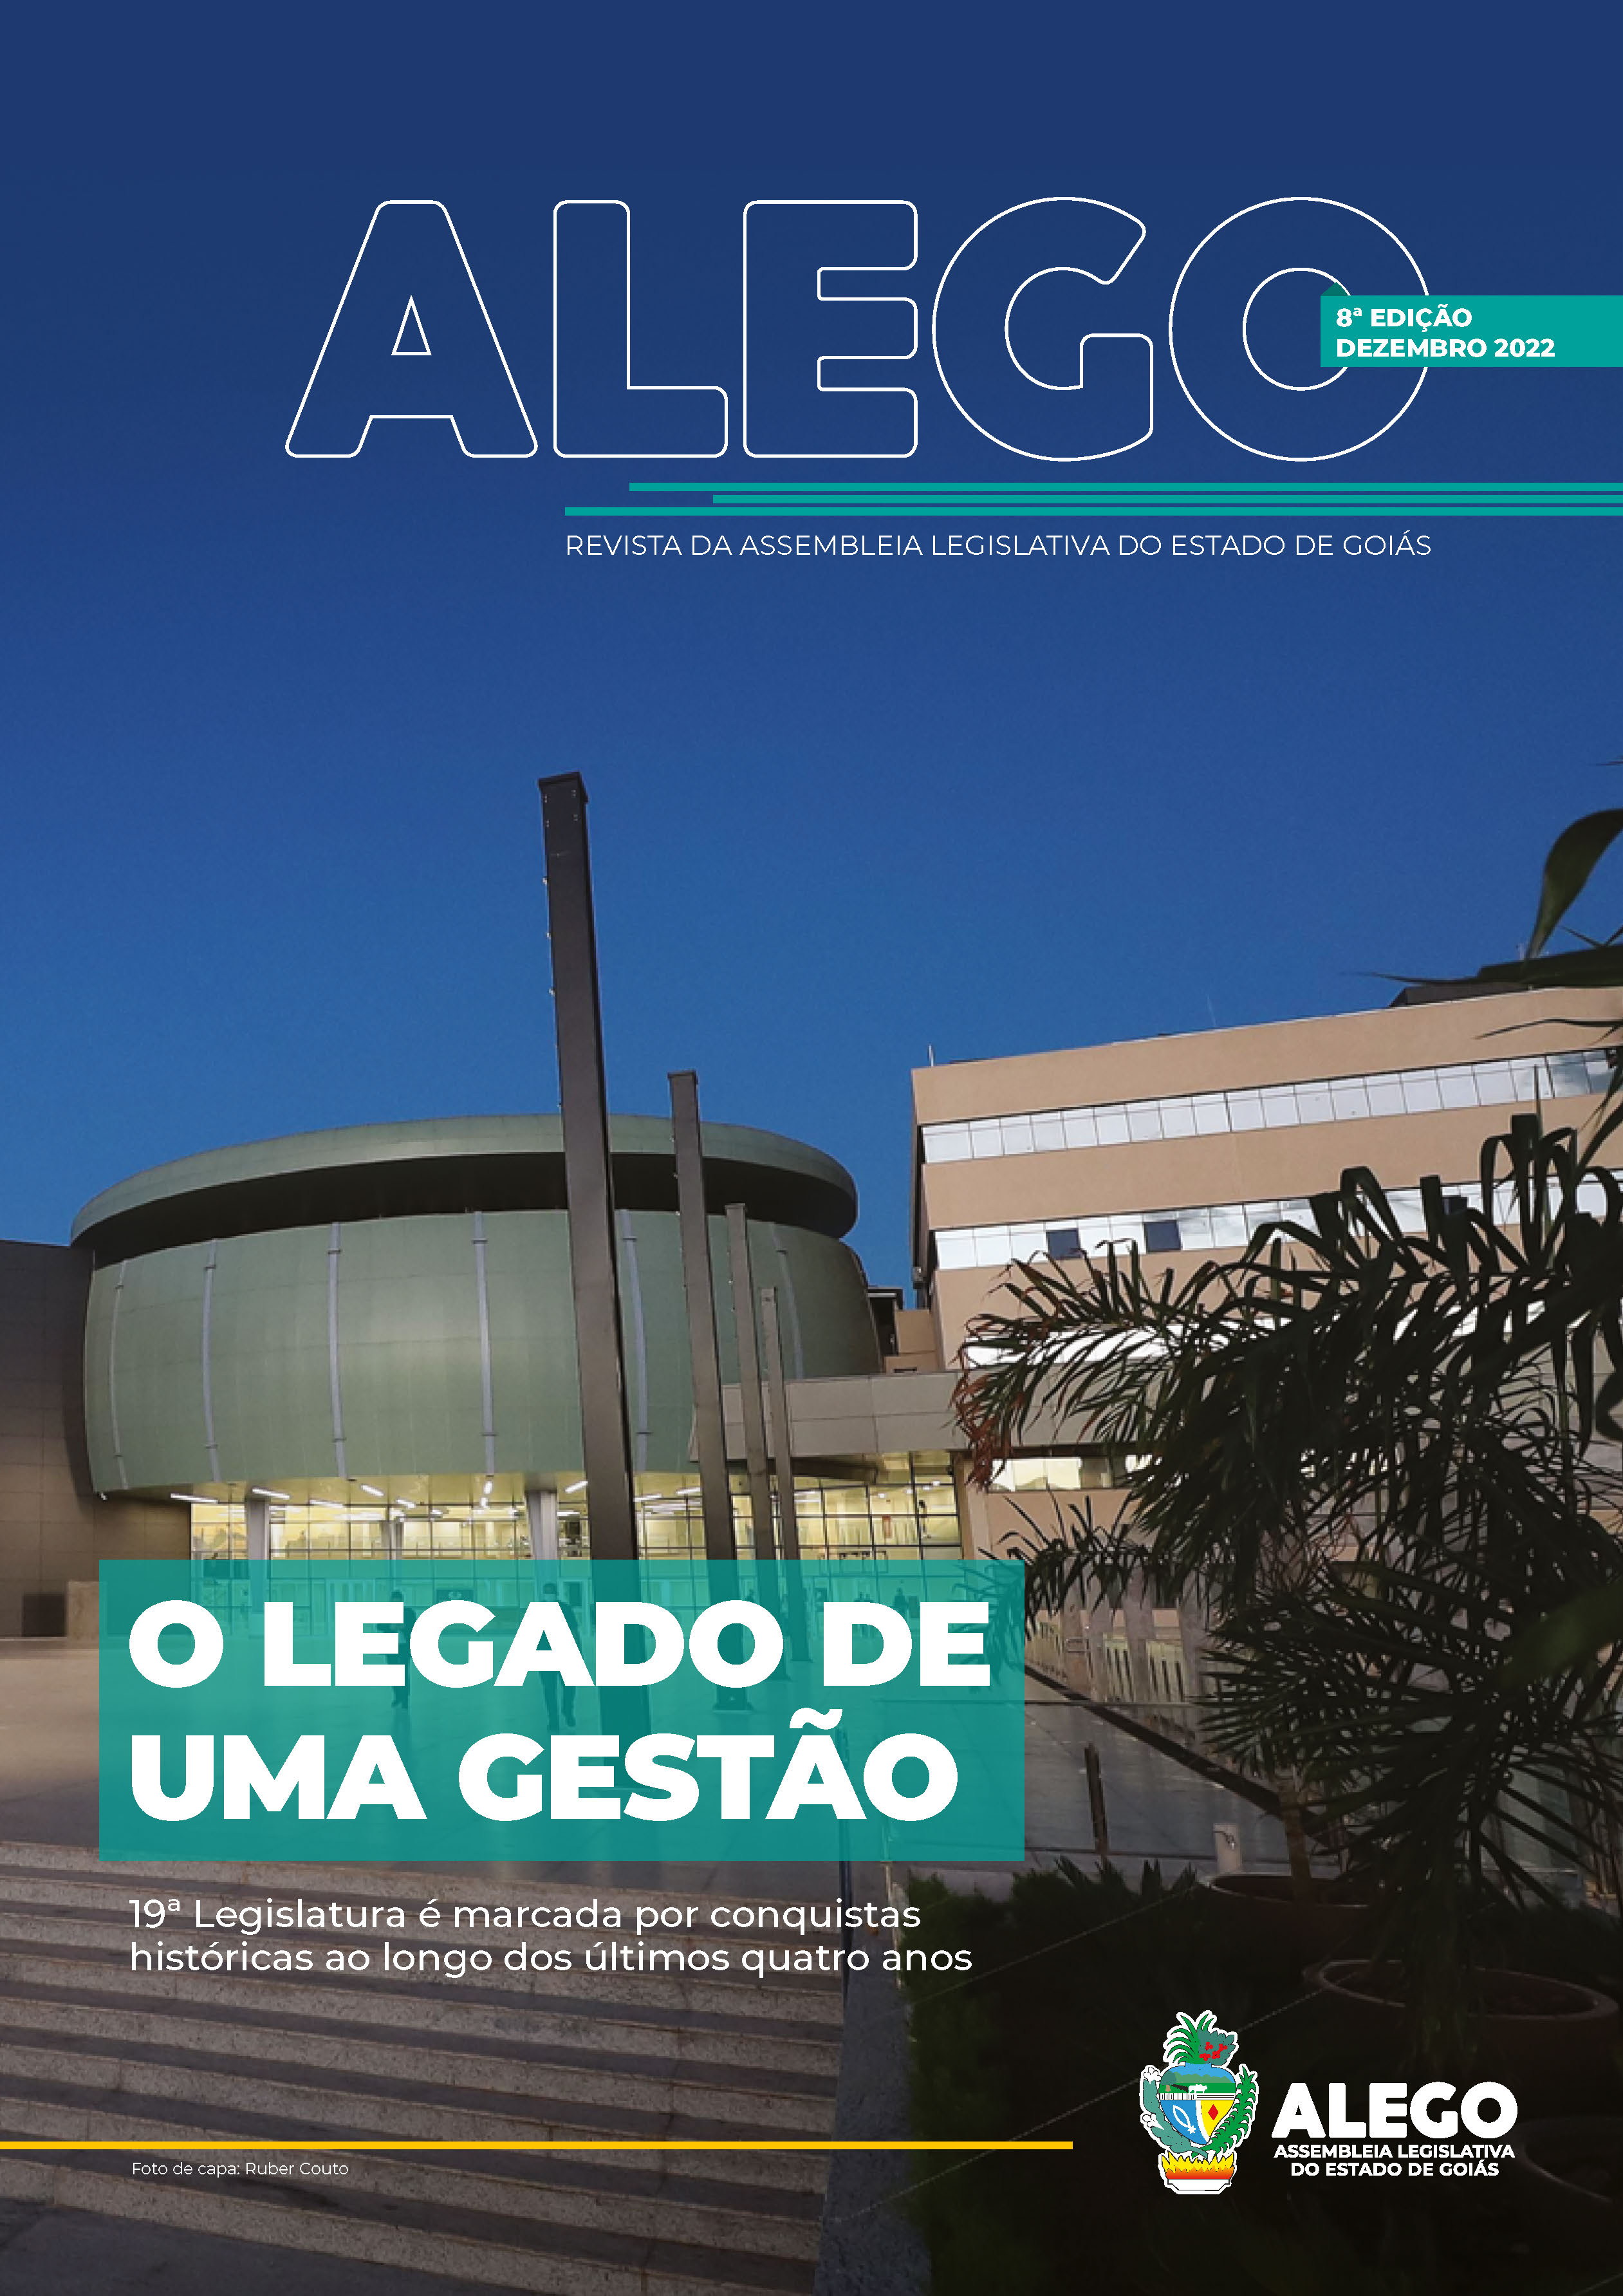 Capa da Revista Alego n.º 8/2022